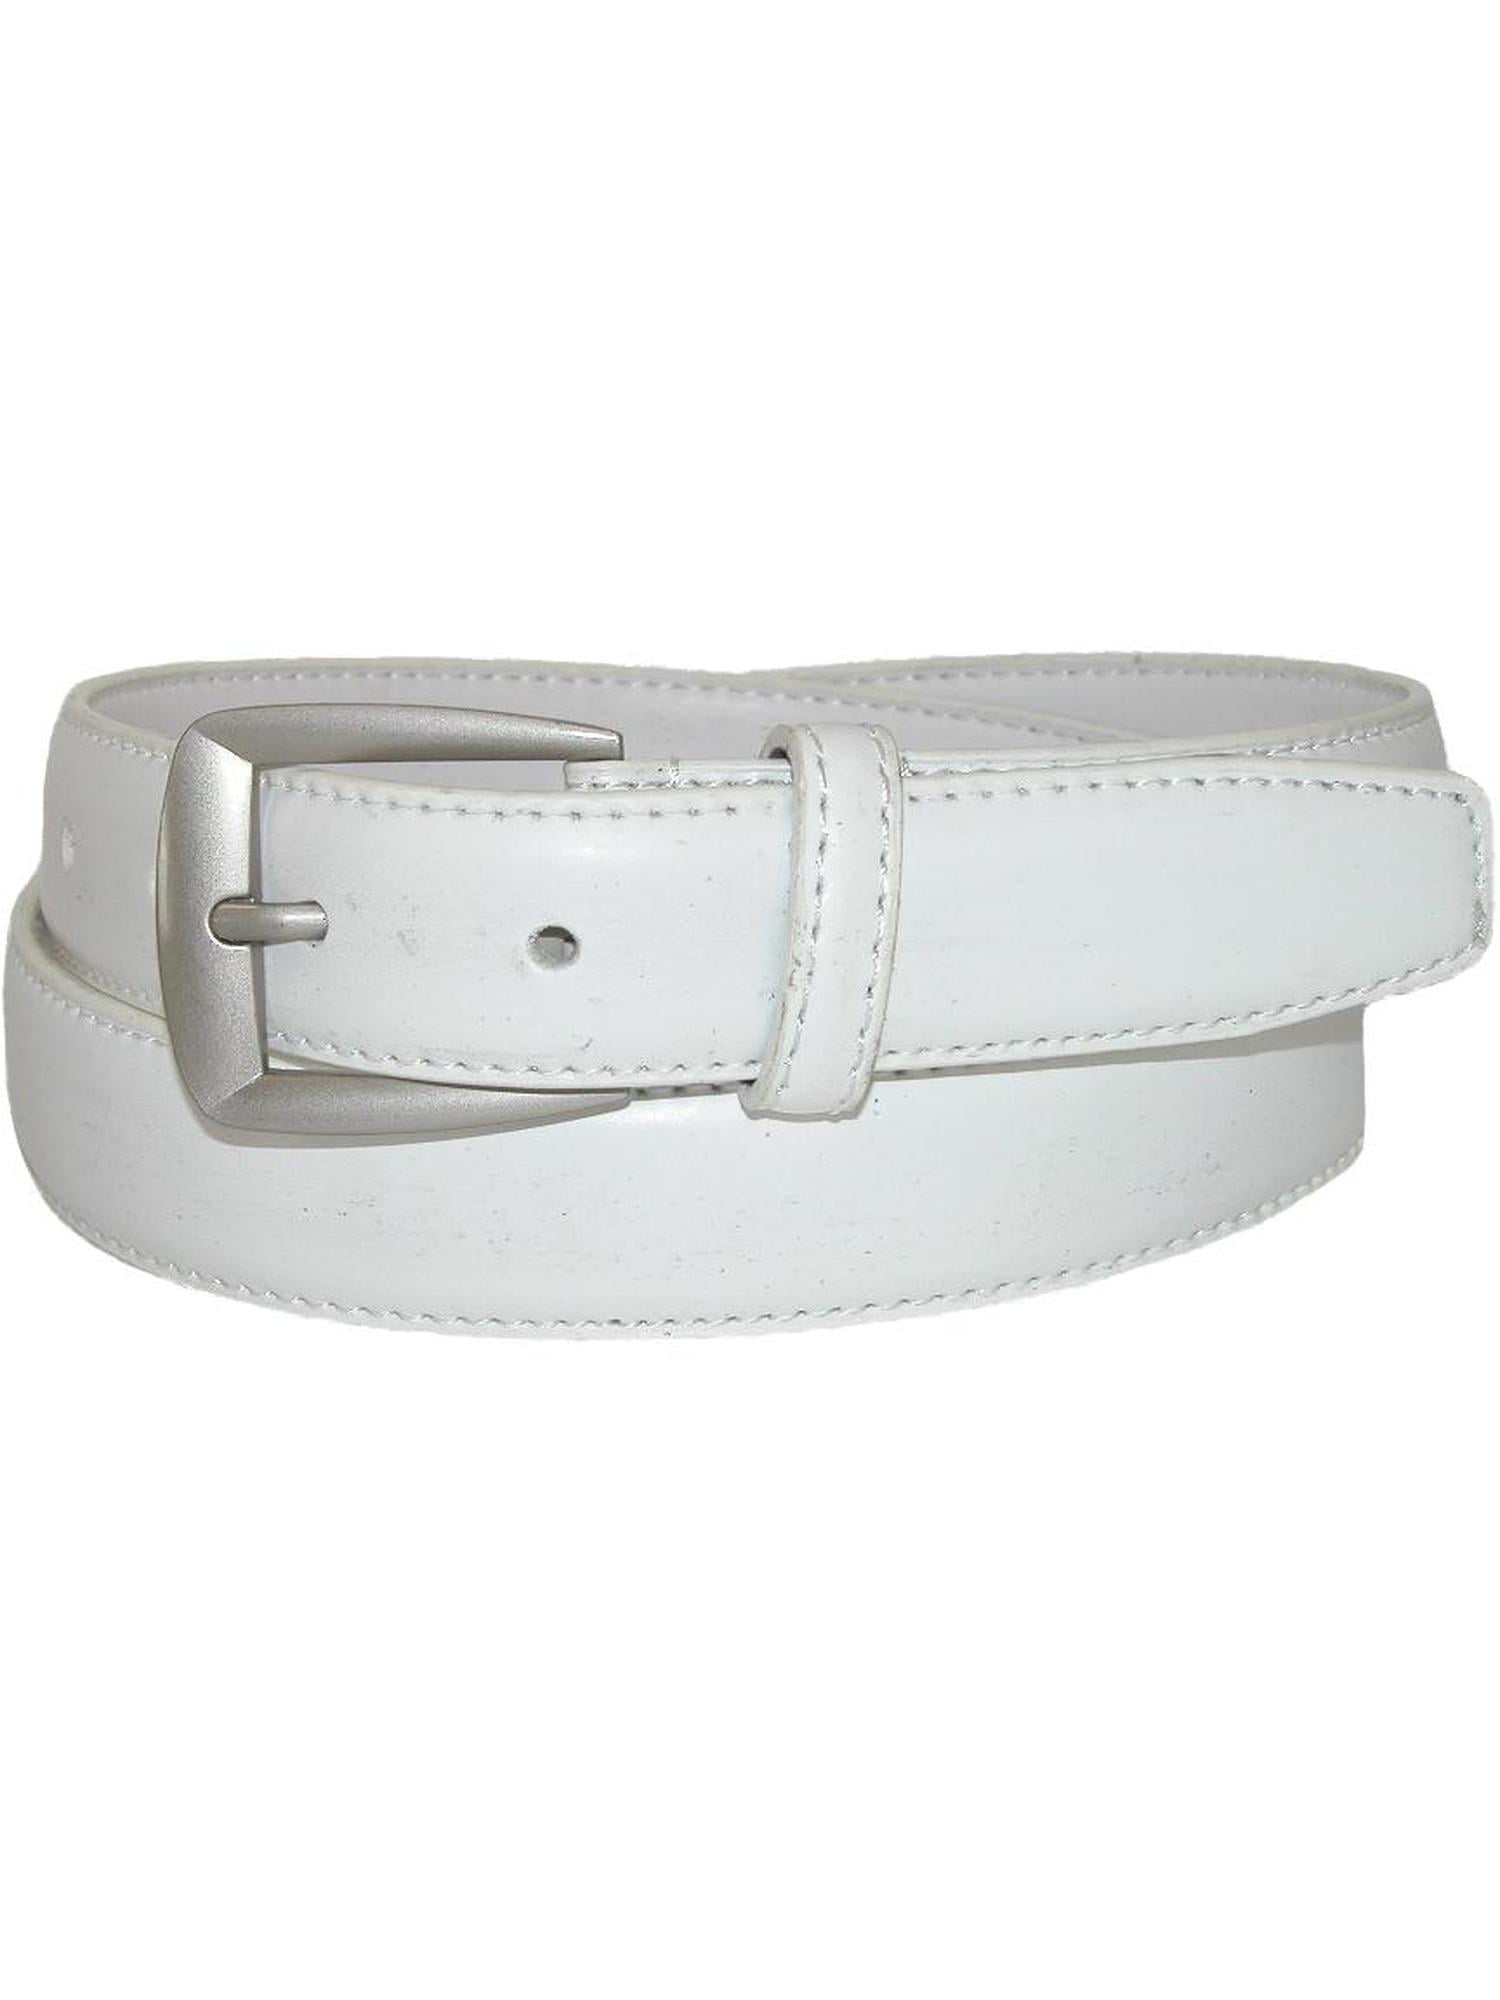 Men's Leather 1 1/4 inch Basic Dress Belt - Walmart.com